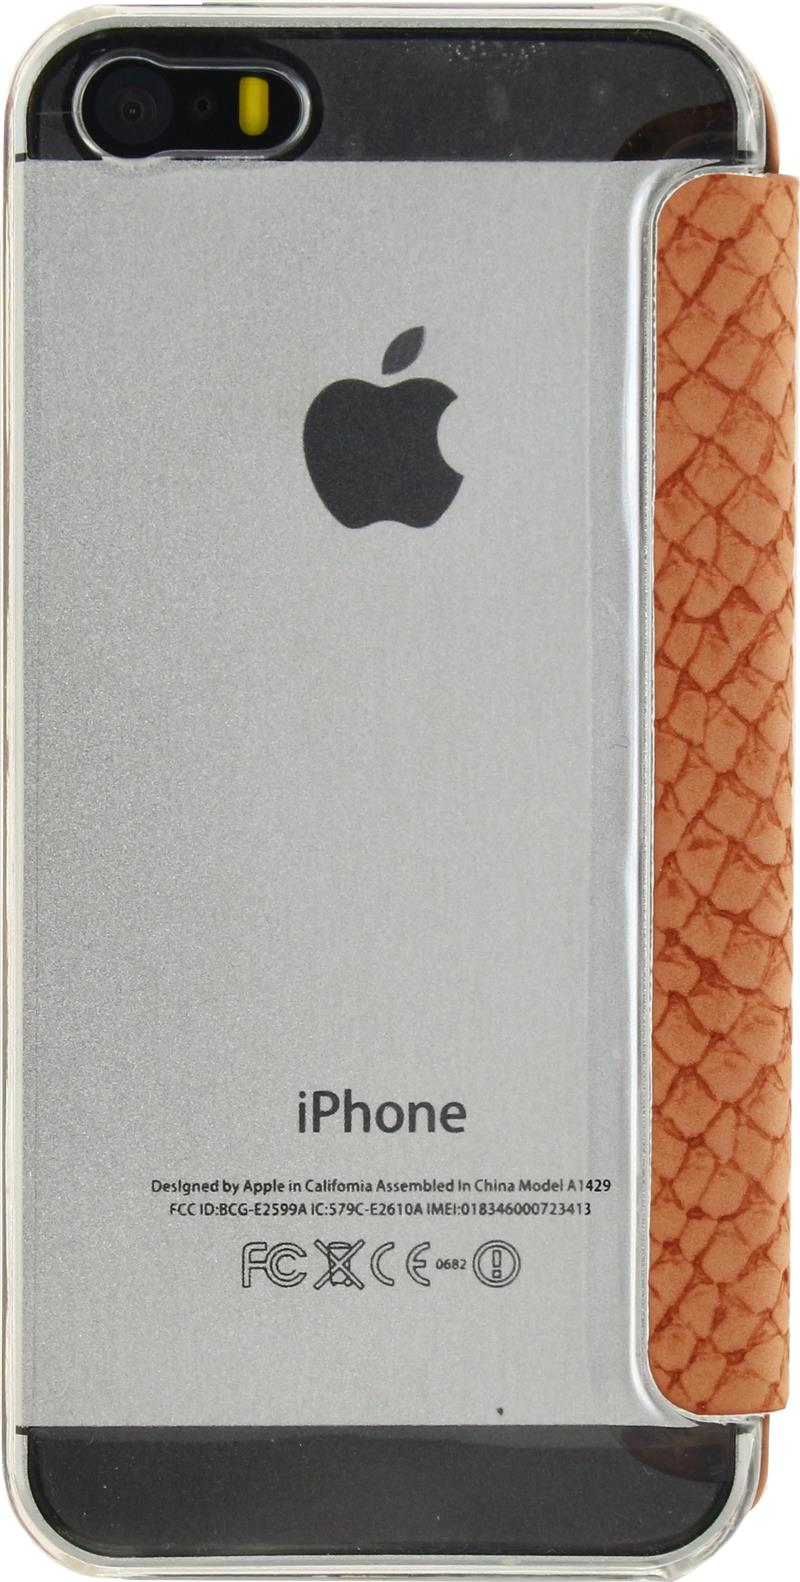 Mobilize Slim Booklet Apple iPhone 5 5S SE Soft Snake Apricot